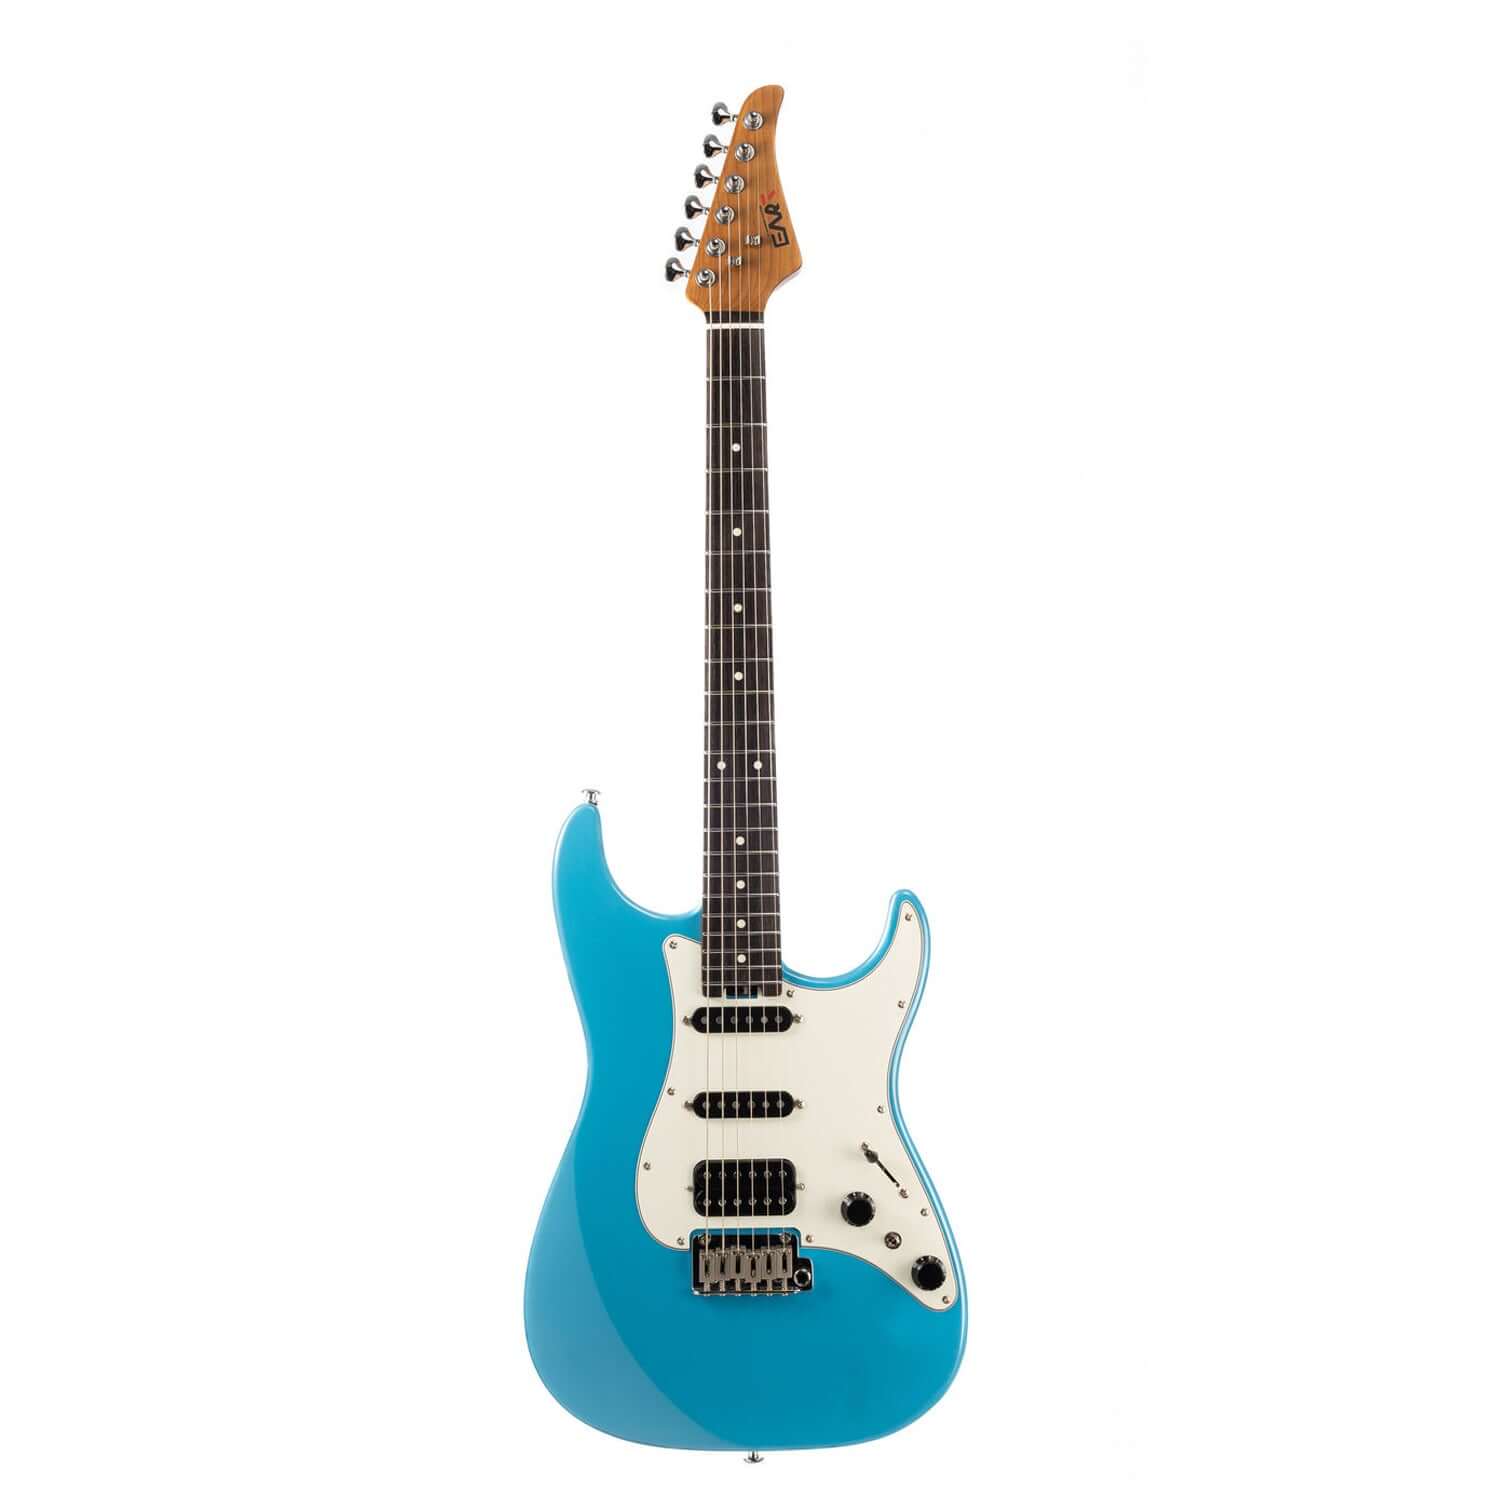 EART DMX-9 electric guitar blue